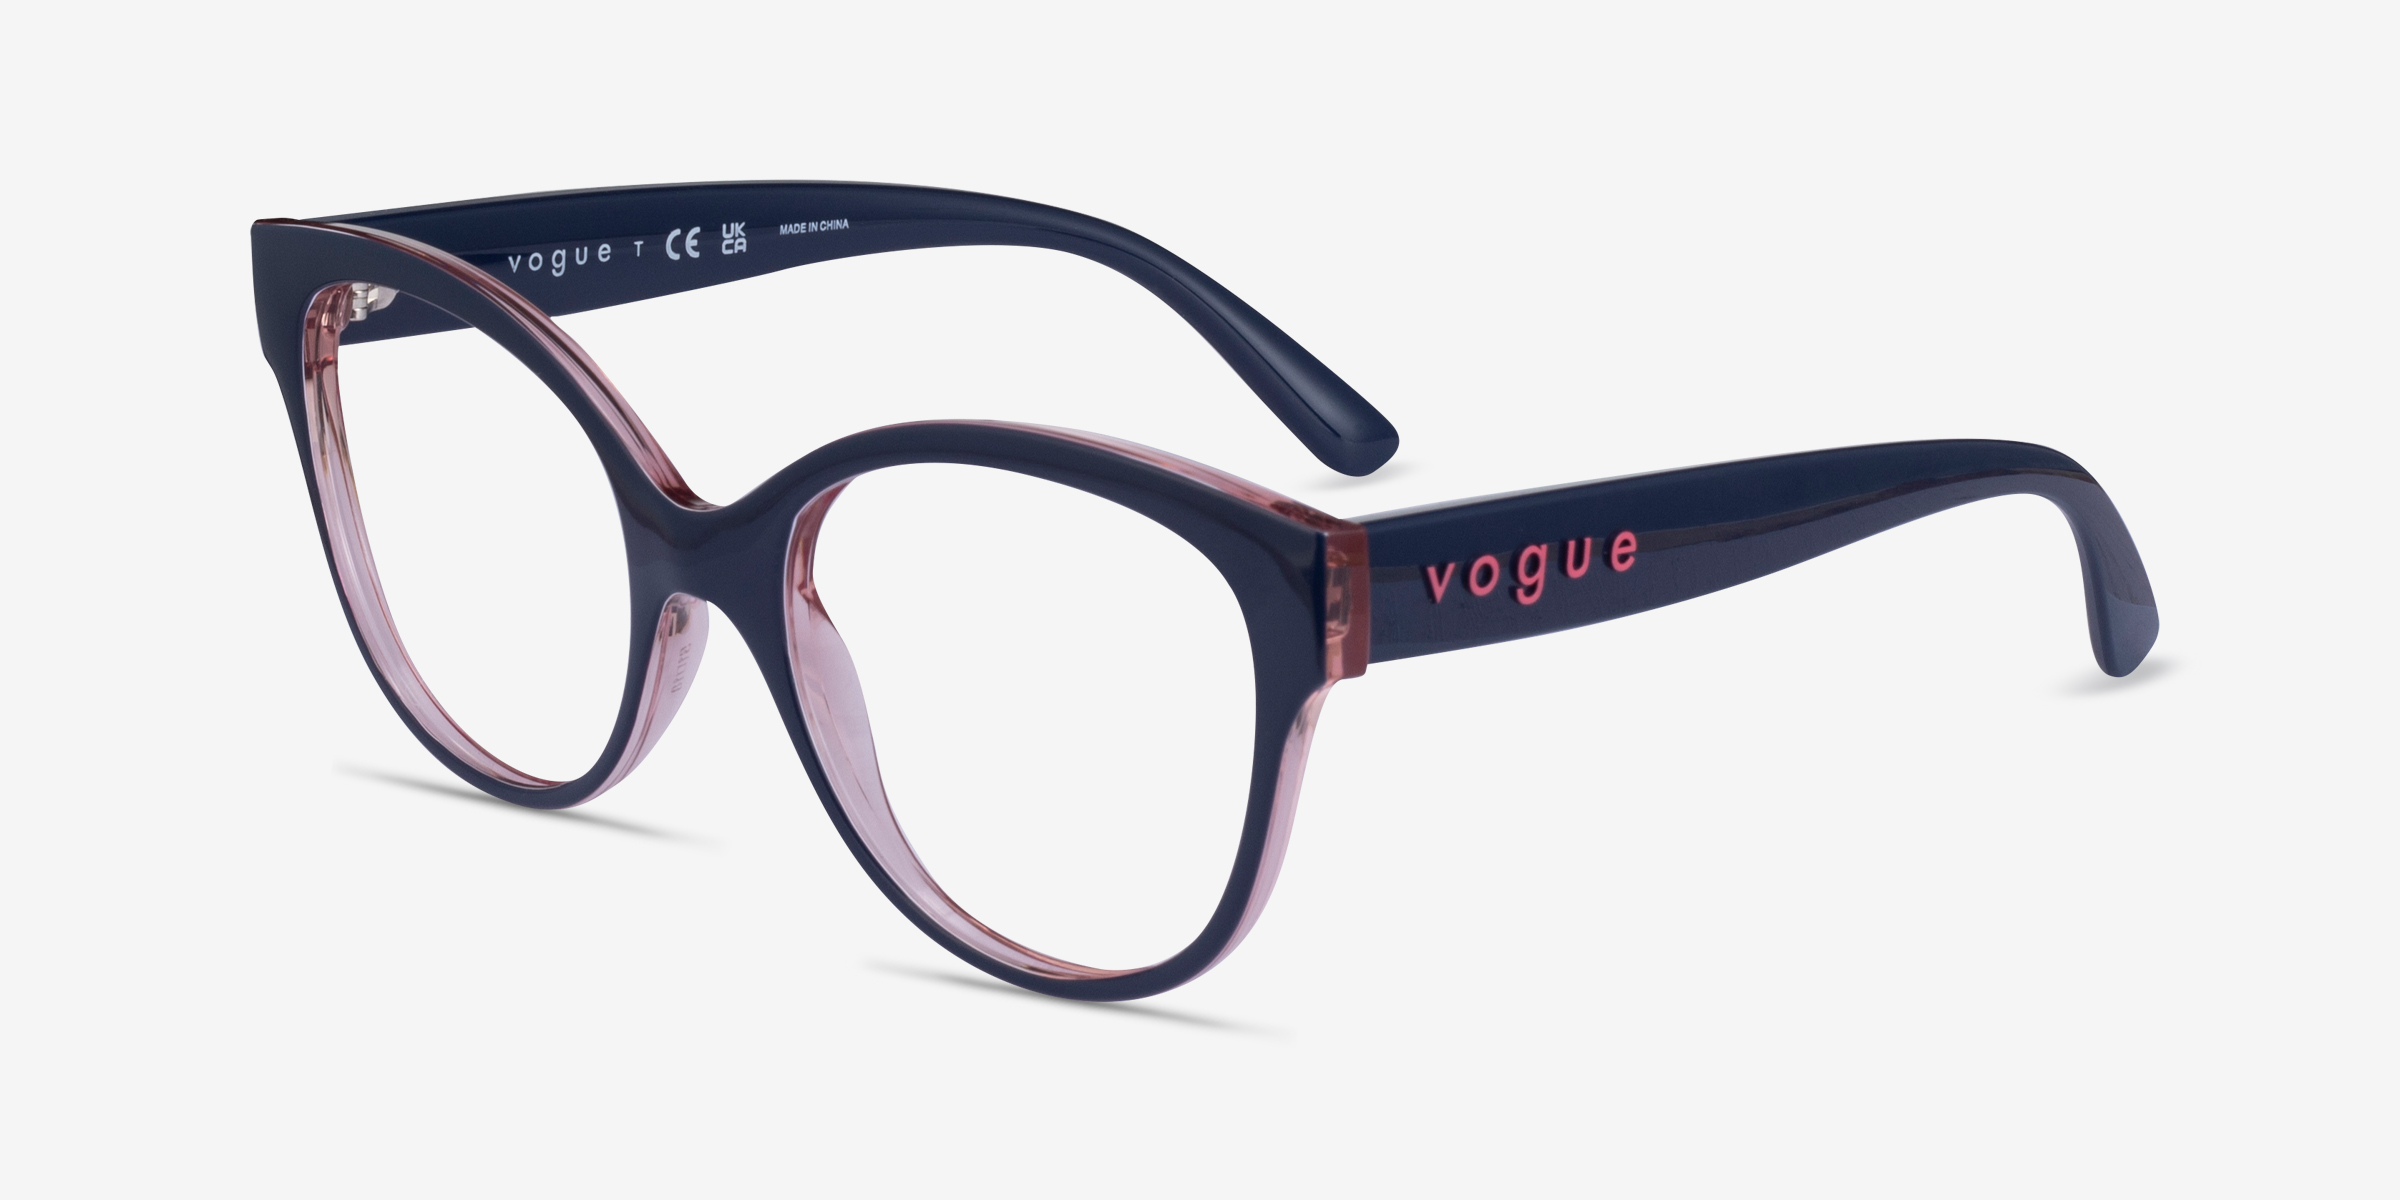 Vogue Eyewear Vo5421 Round Dark Blue Frame Glasses For Women Eyebuydirect